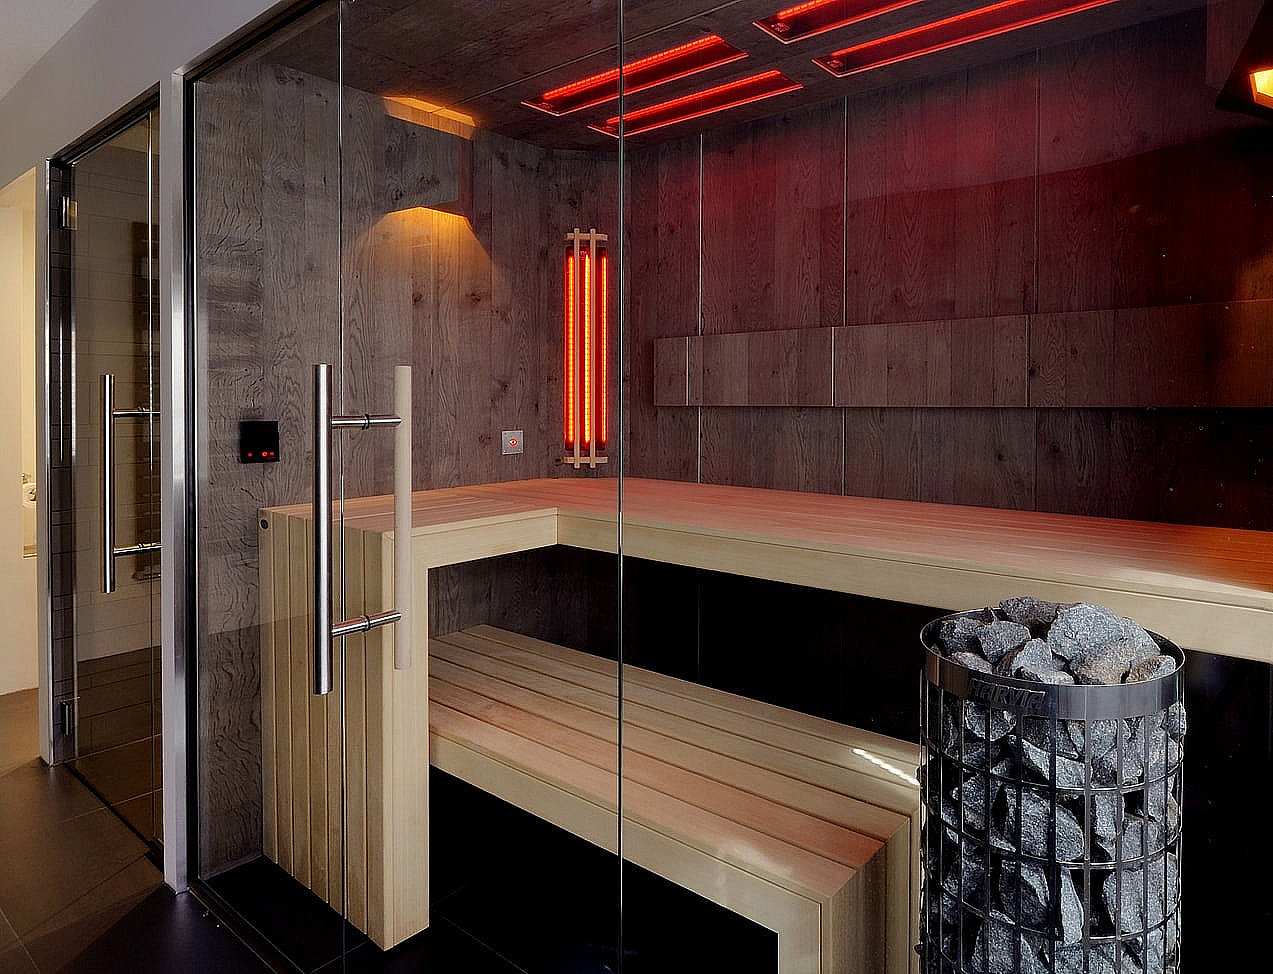 combiné sauna / cabine infrarouge 